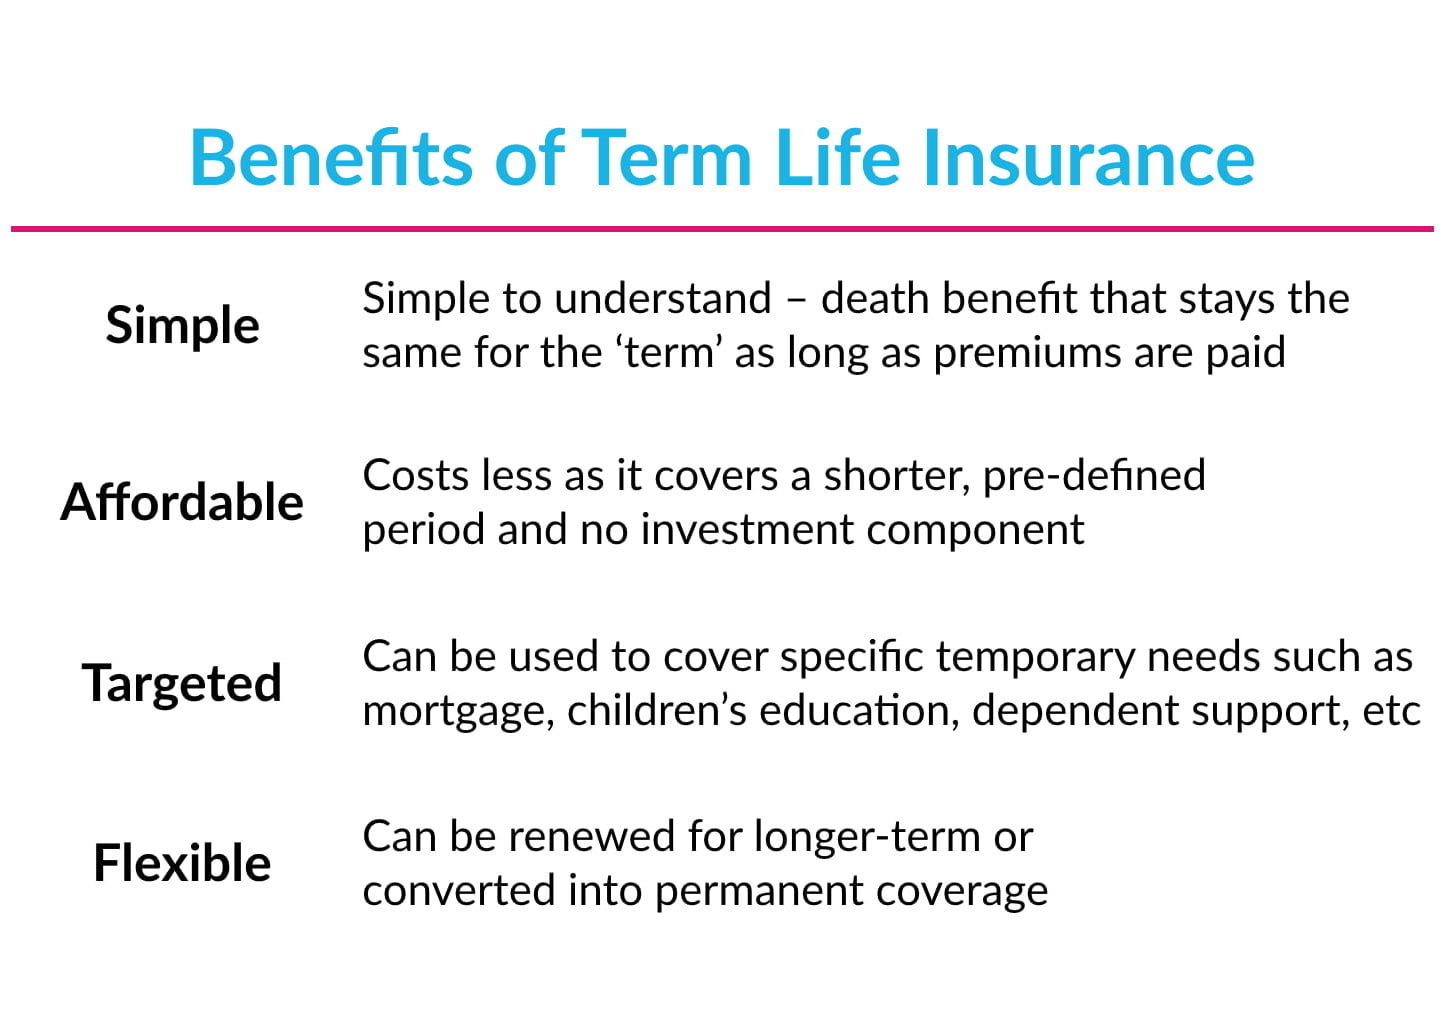 Benefits of term life insurance